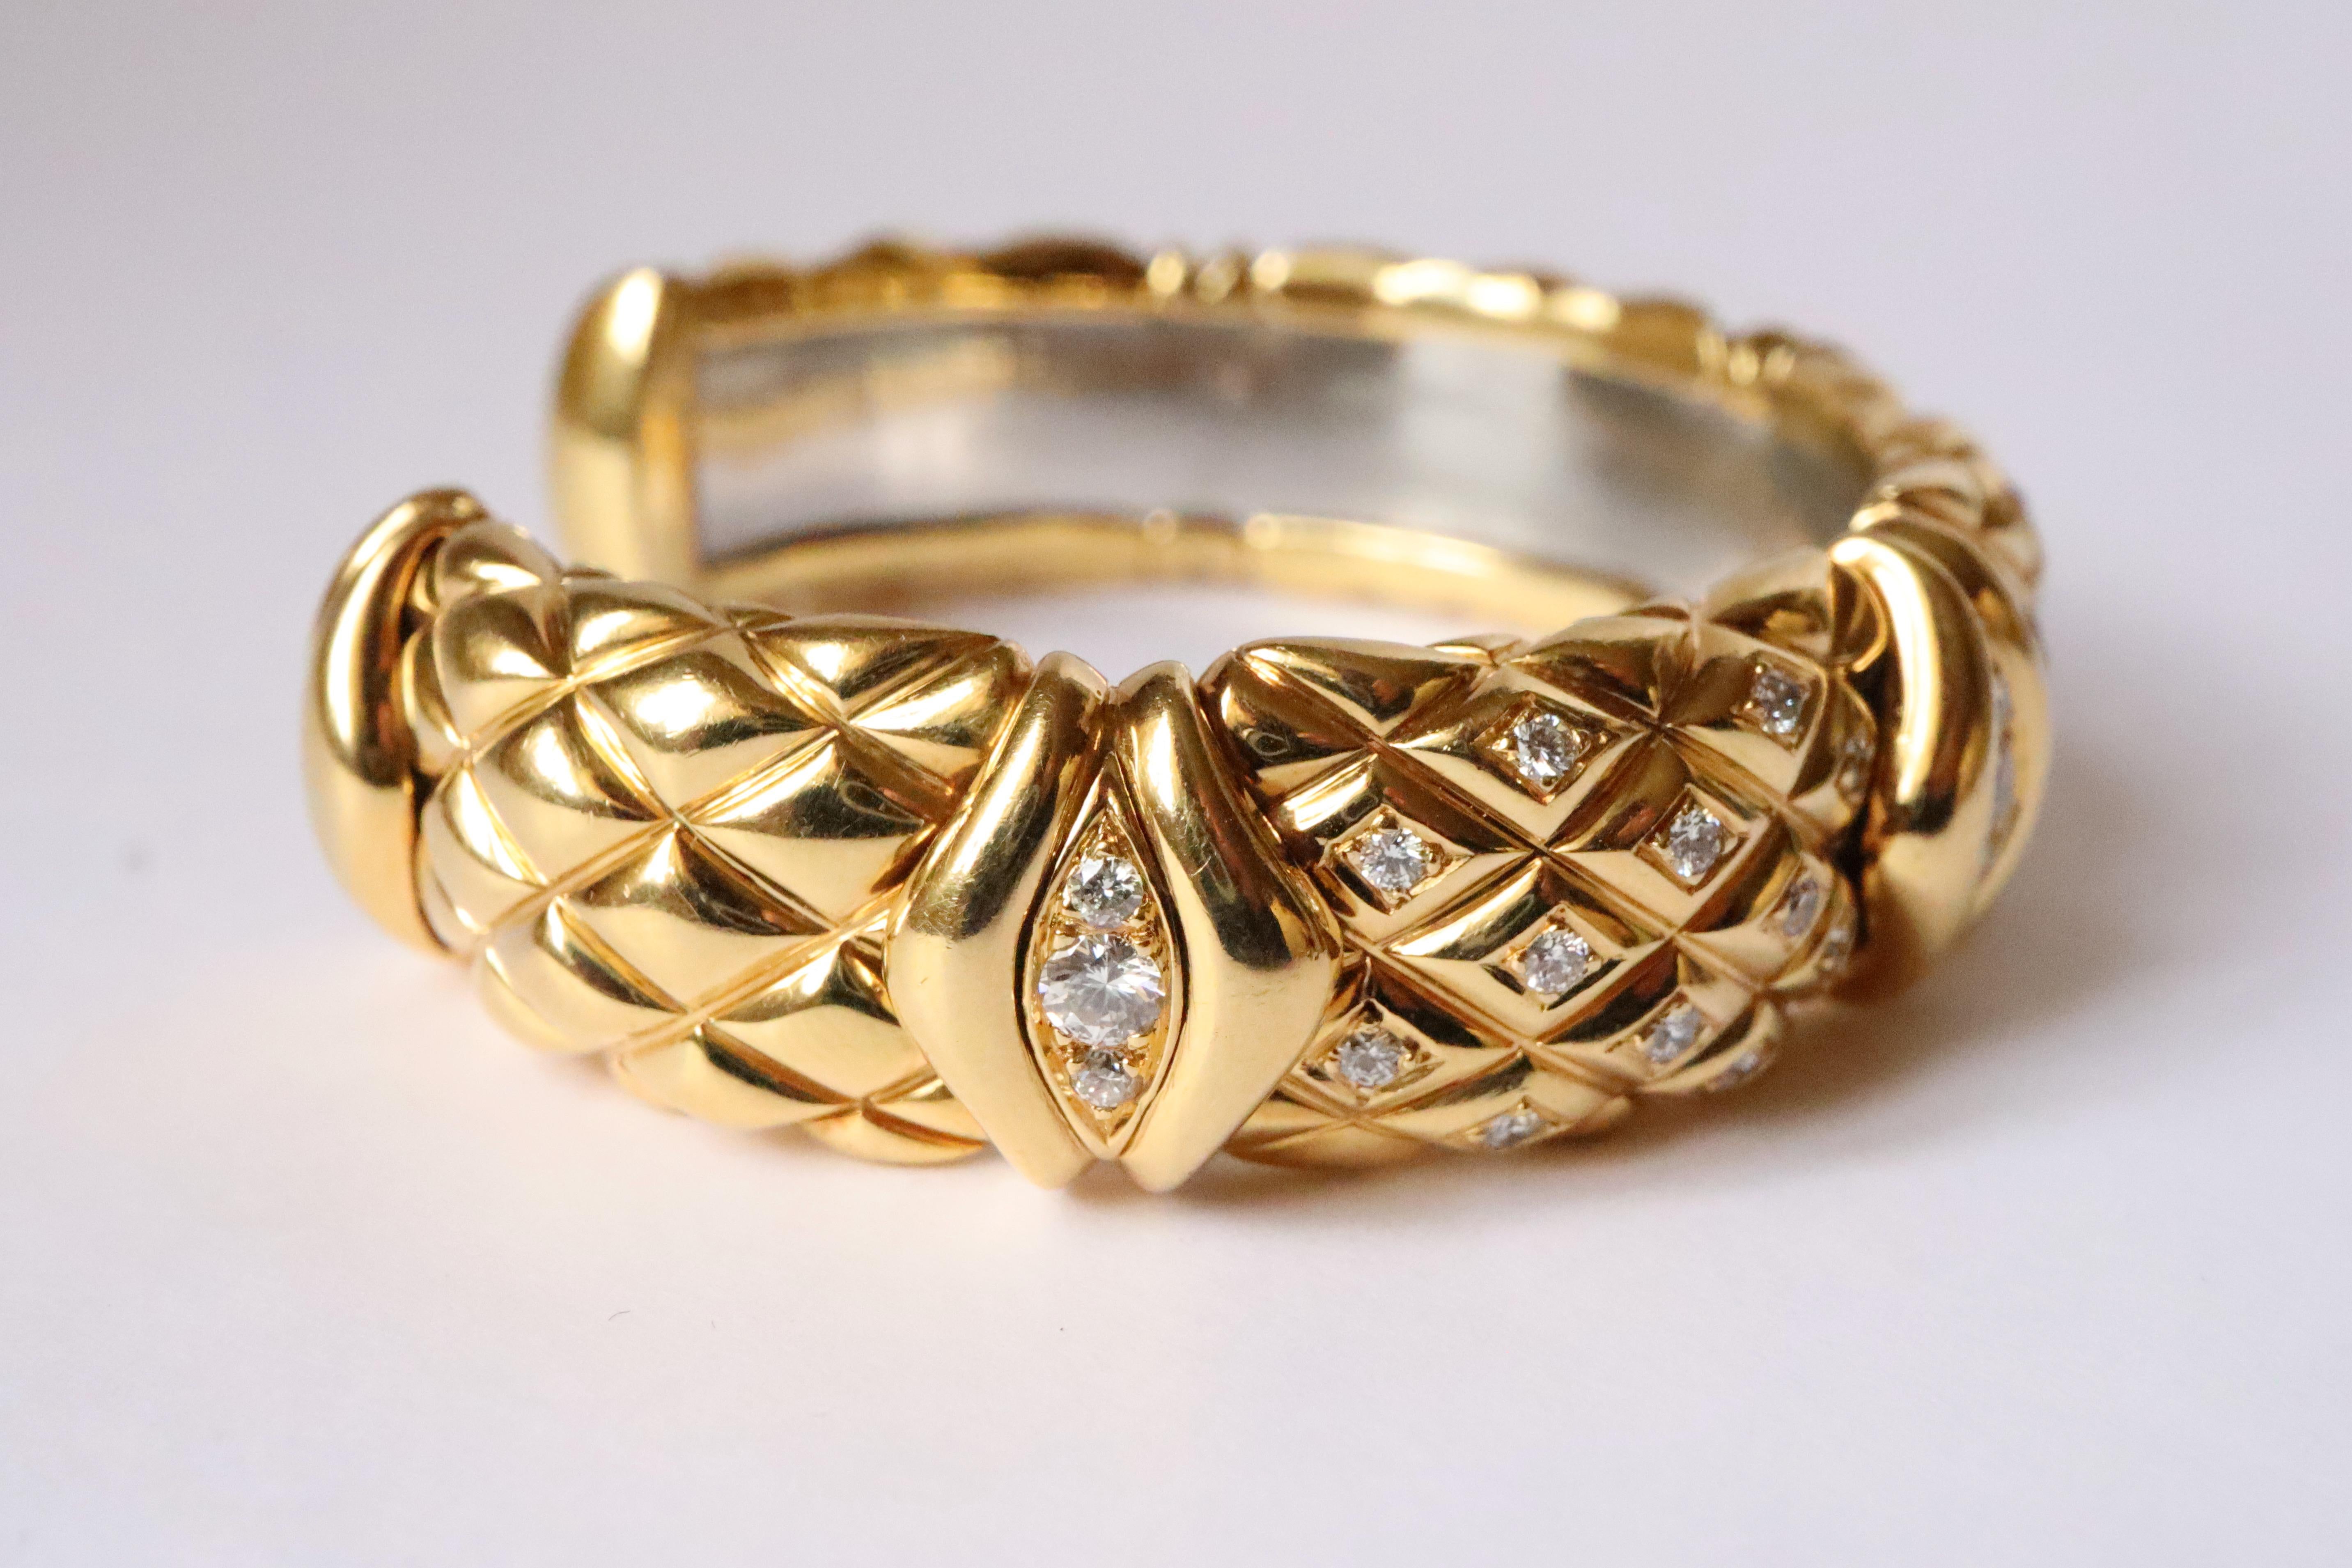 Mauboussin Semi-Rigid Bracelet in 18 Kt Yellow Gold and Diamonds For Sale 3